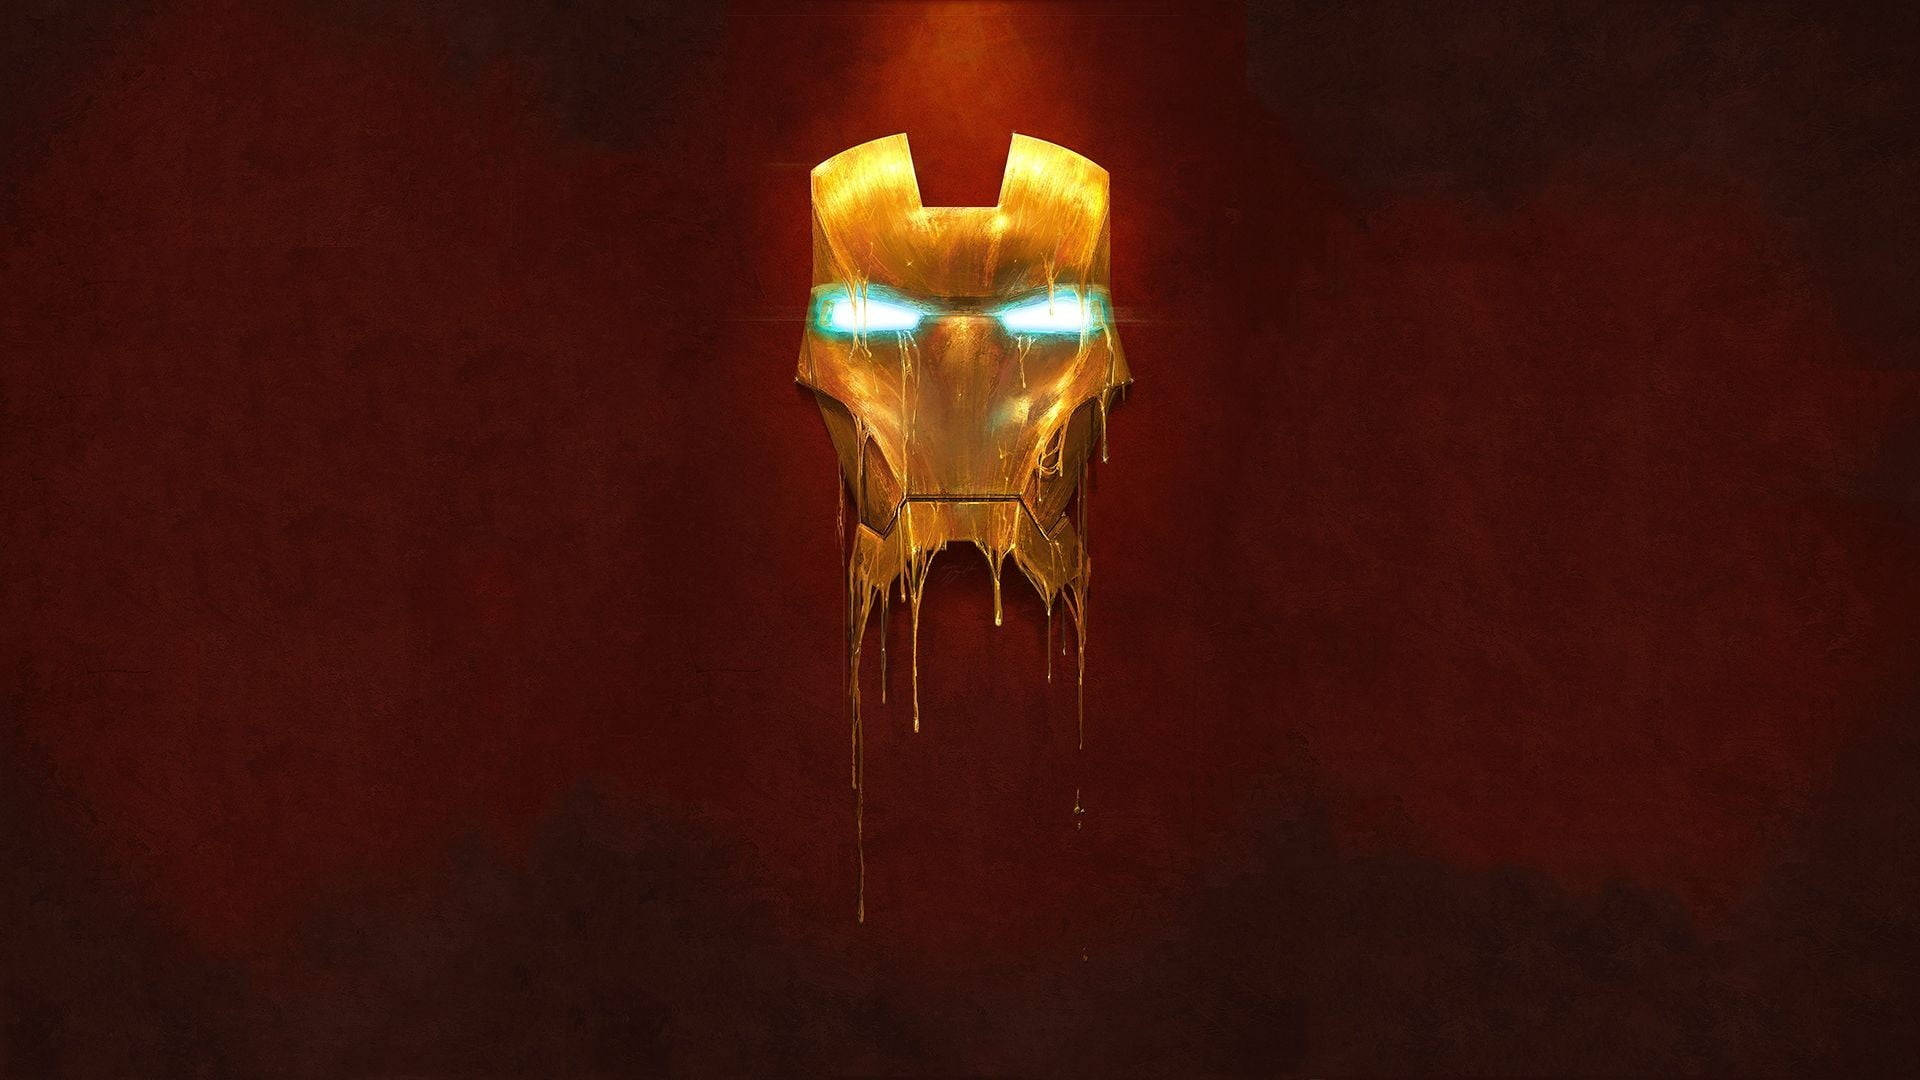 Hd Superhero Iron Man Helmet